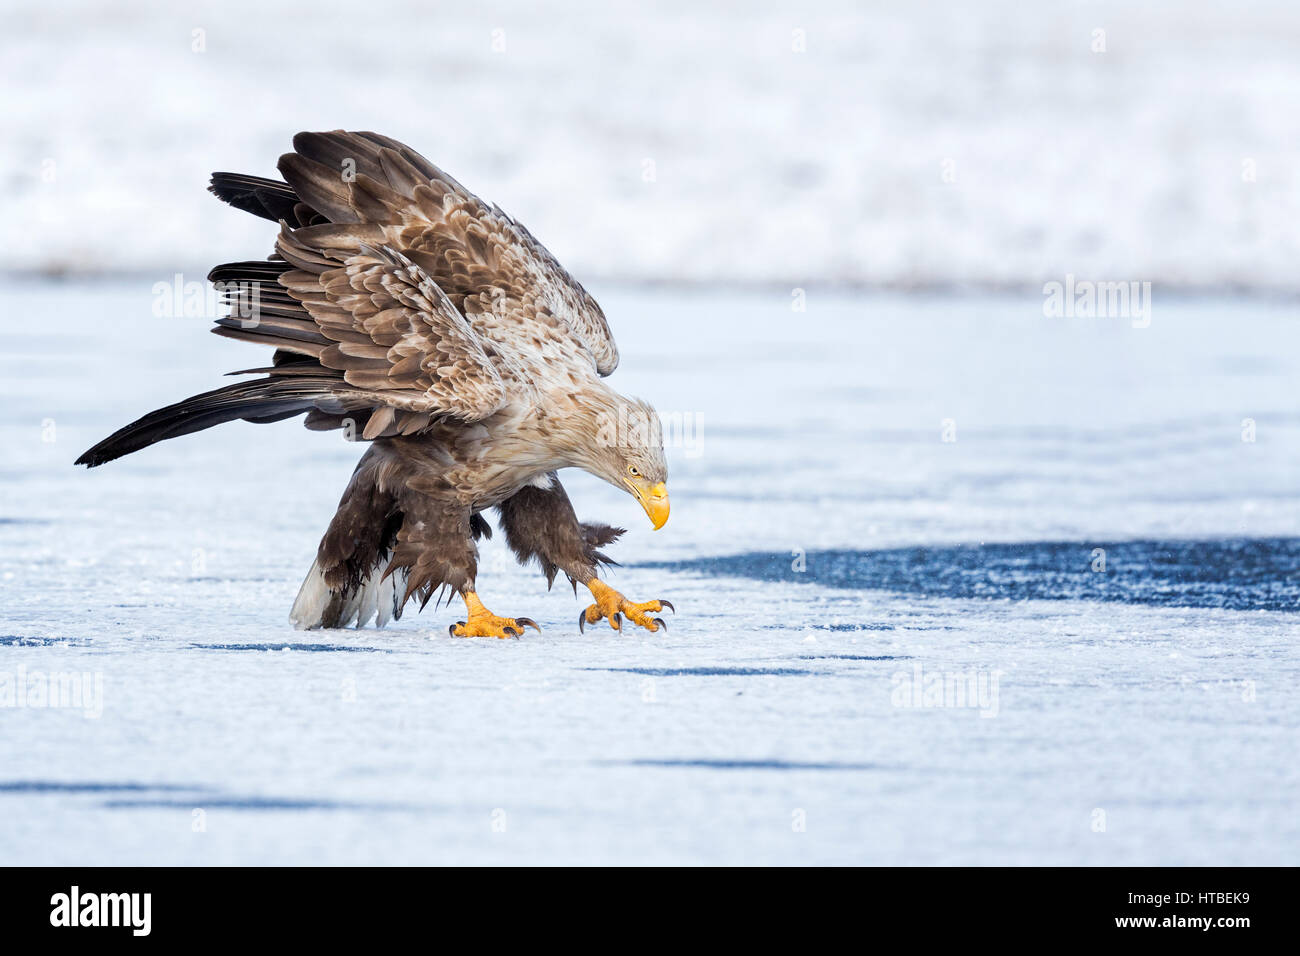 Eagle (Haliaeetus albicilla), threatening adult bird on a frozen lake, Gostynińsko-Włocławski Park, Poland Stock Photo